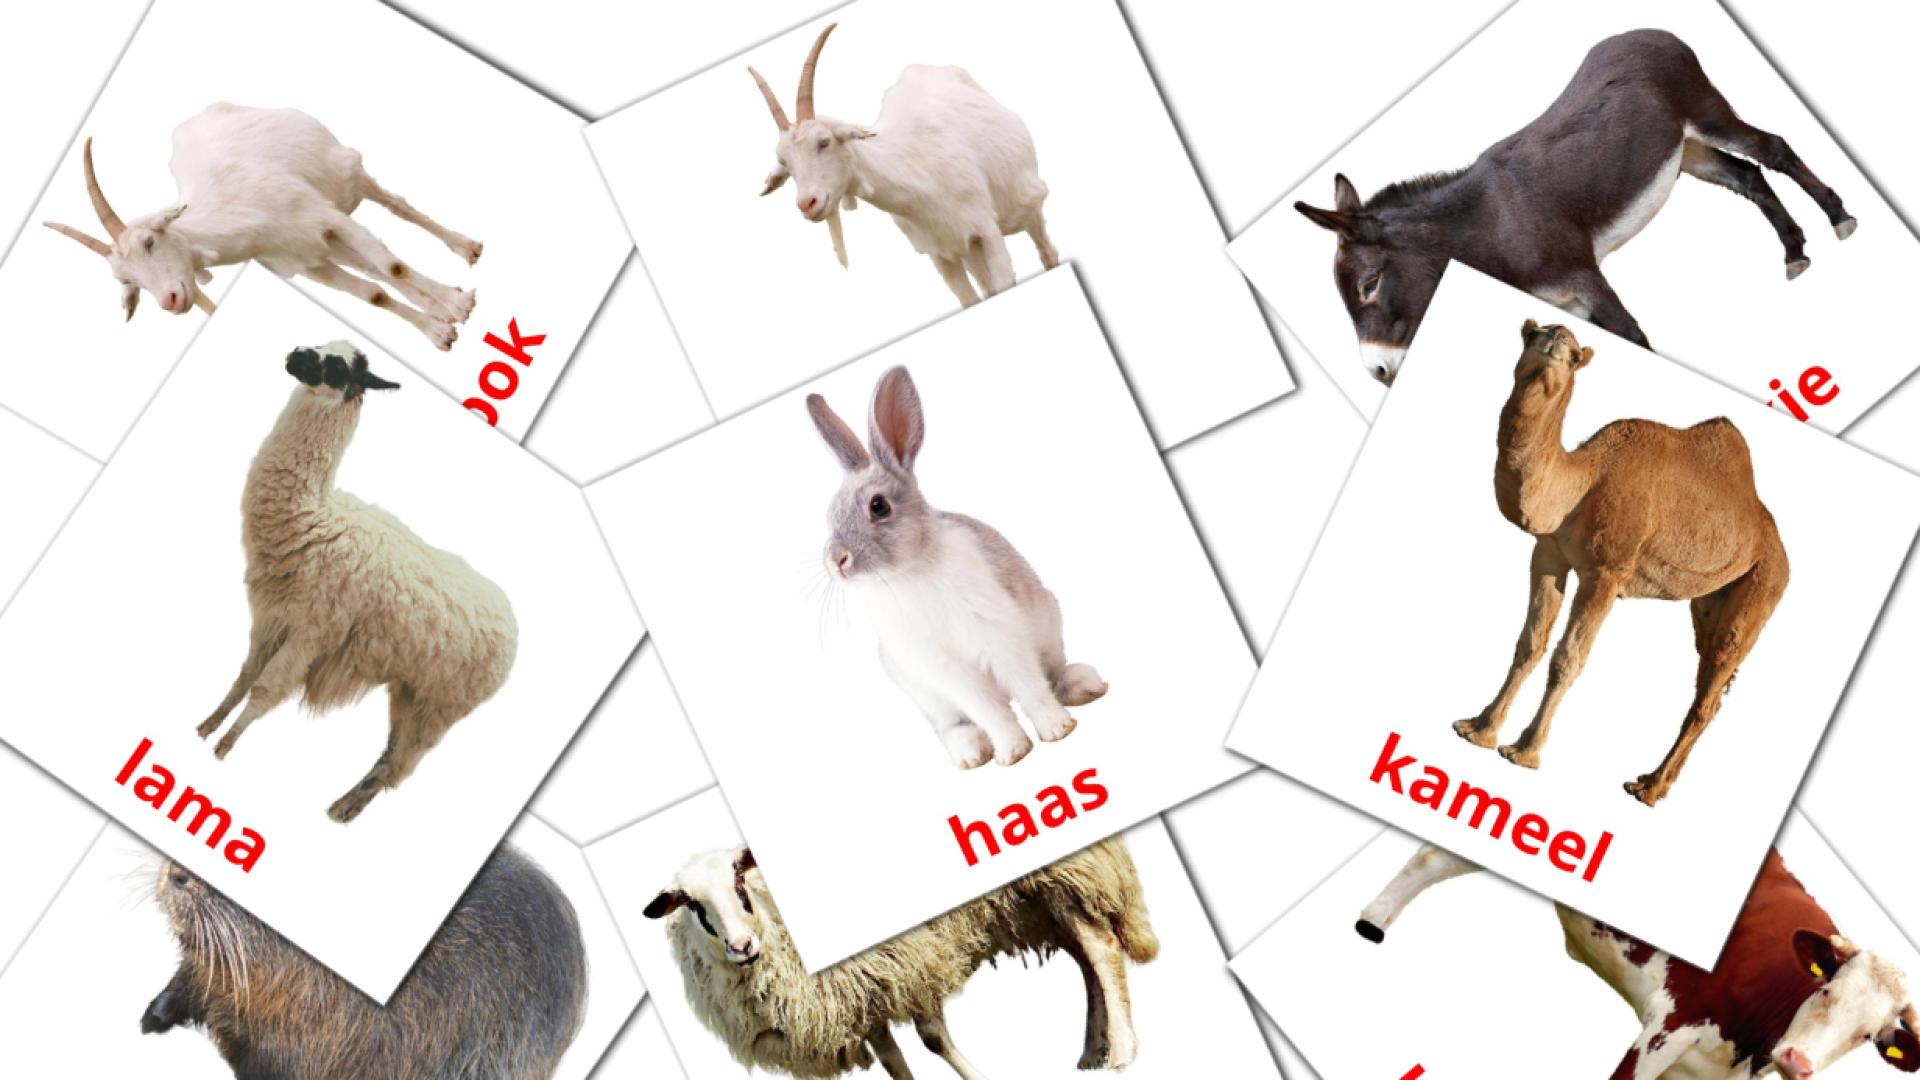 Farm animals - afrikaans vocabulary cards